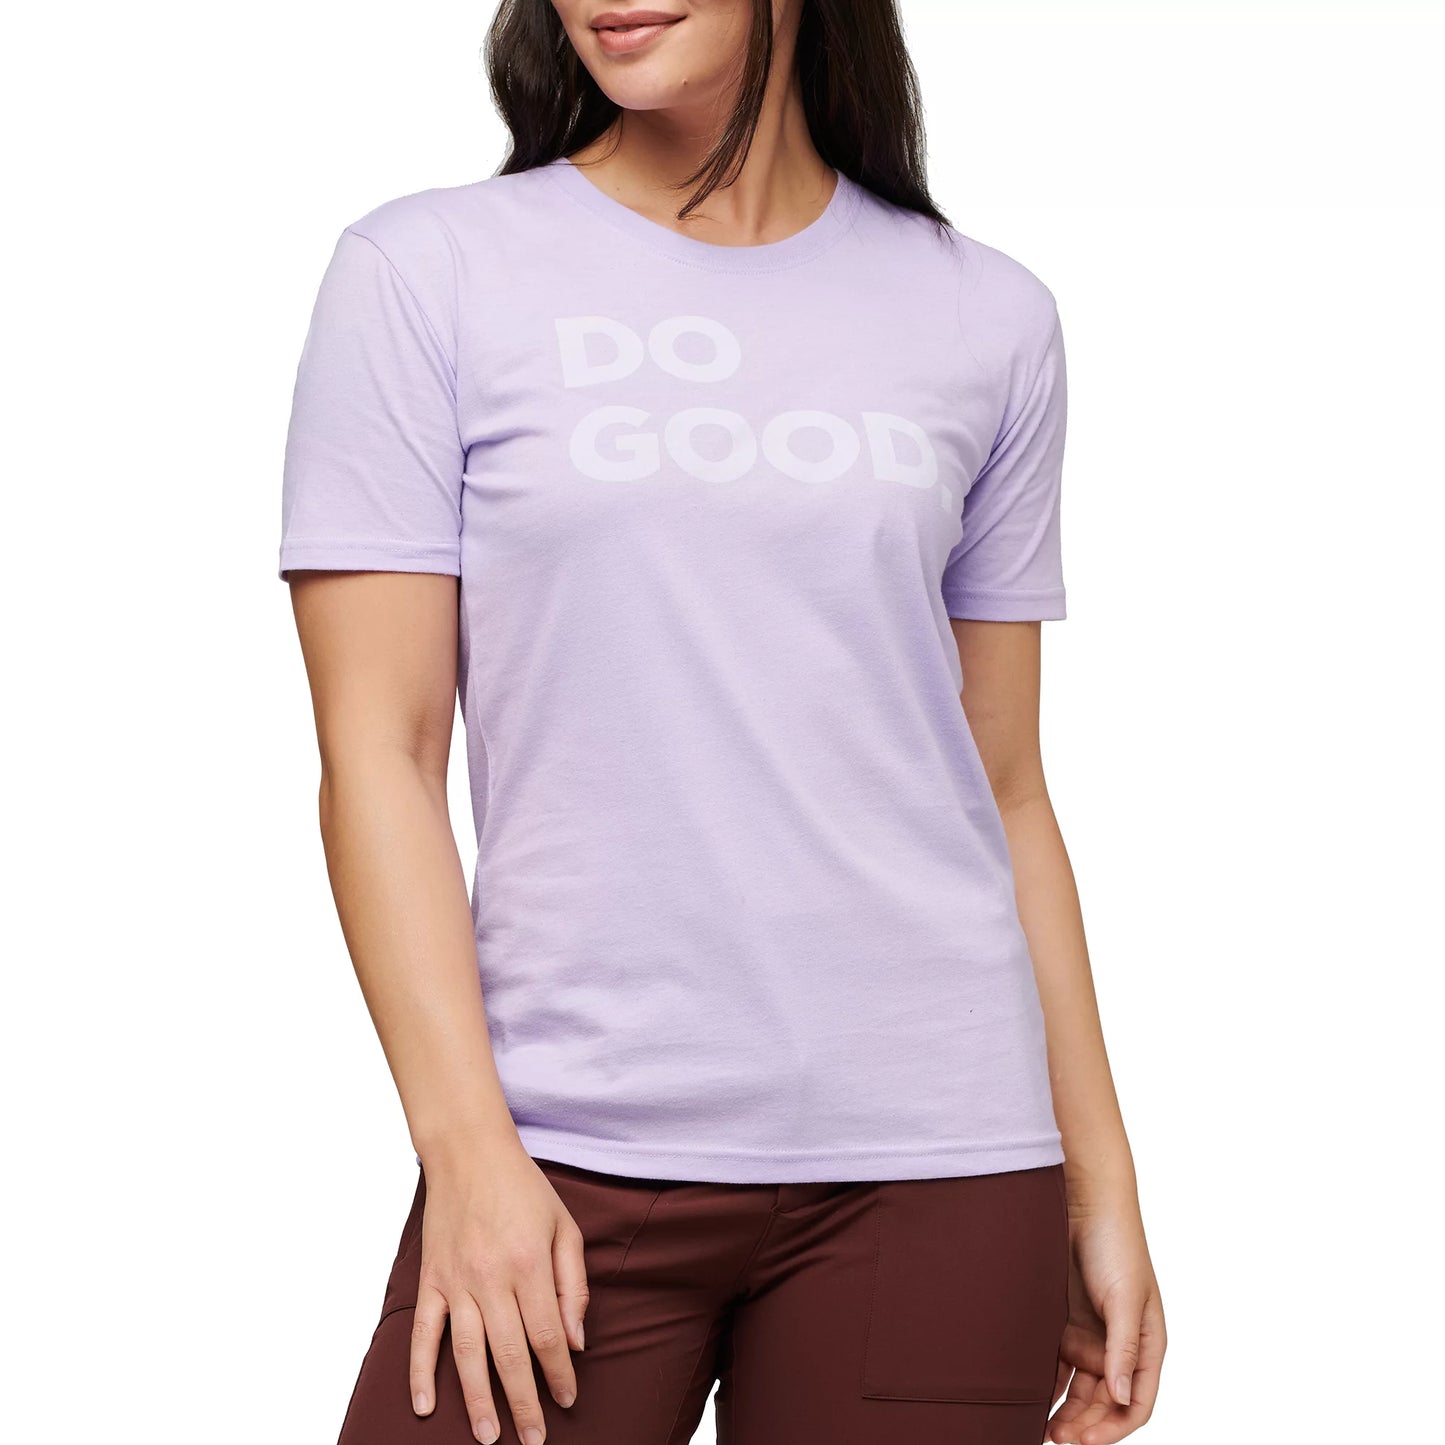 Cotopaxi: Women's Do Good T-Shirt